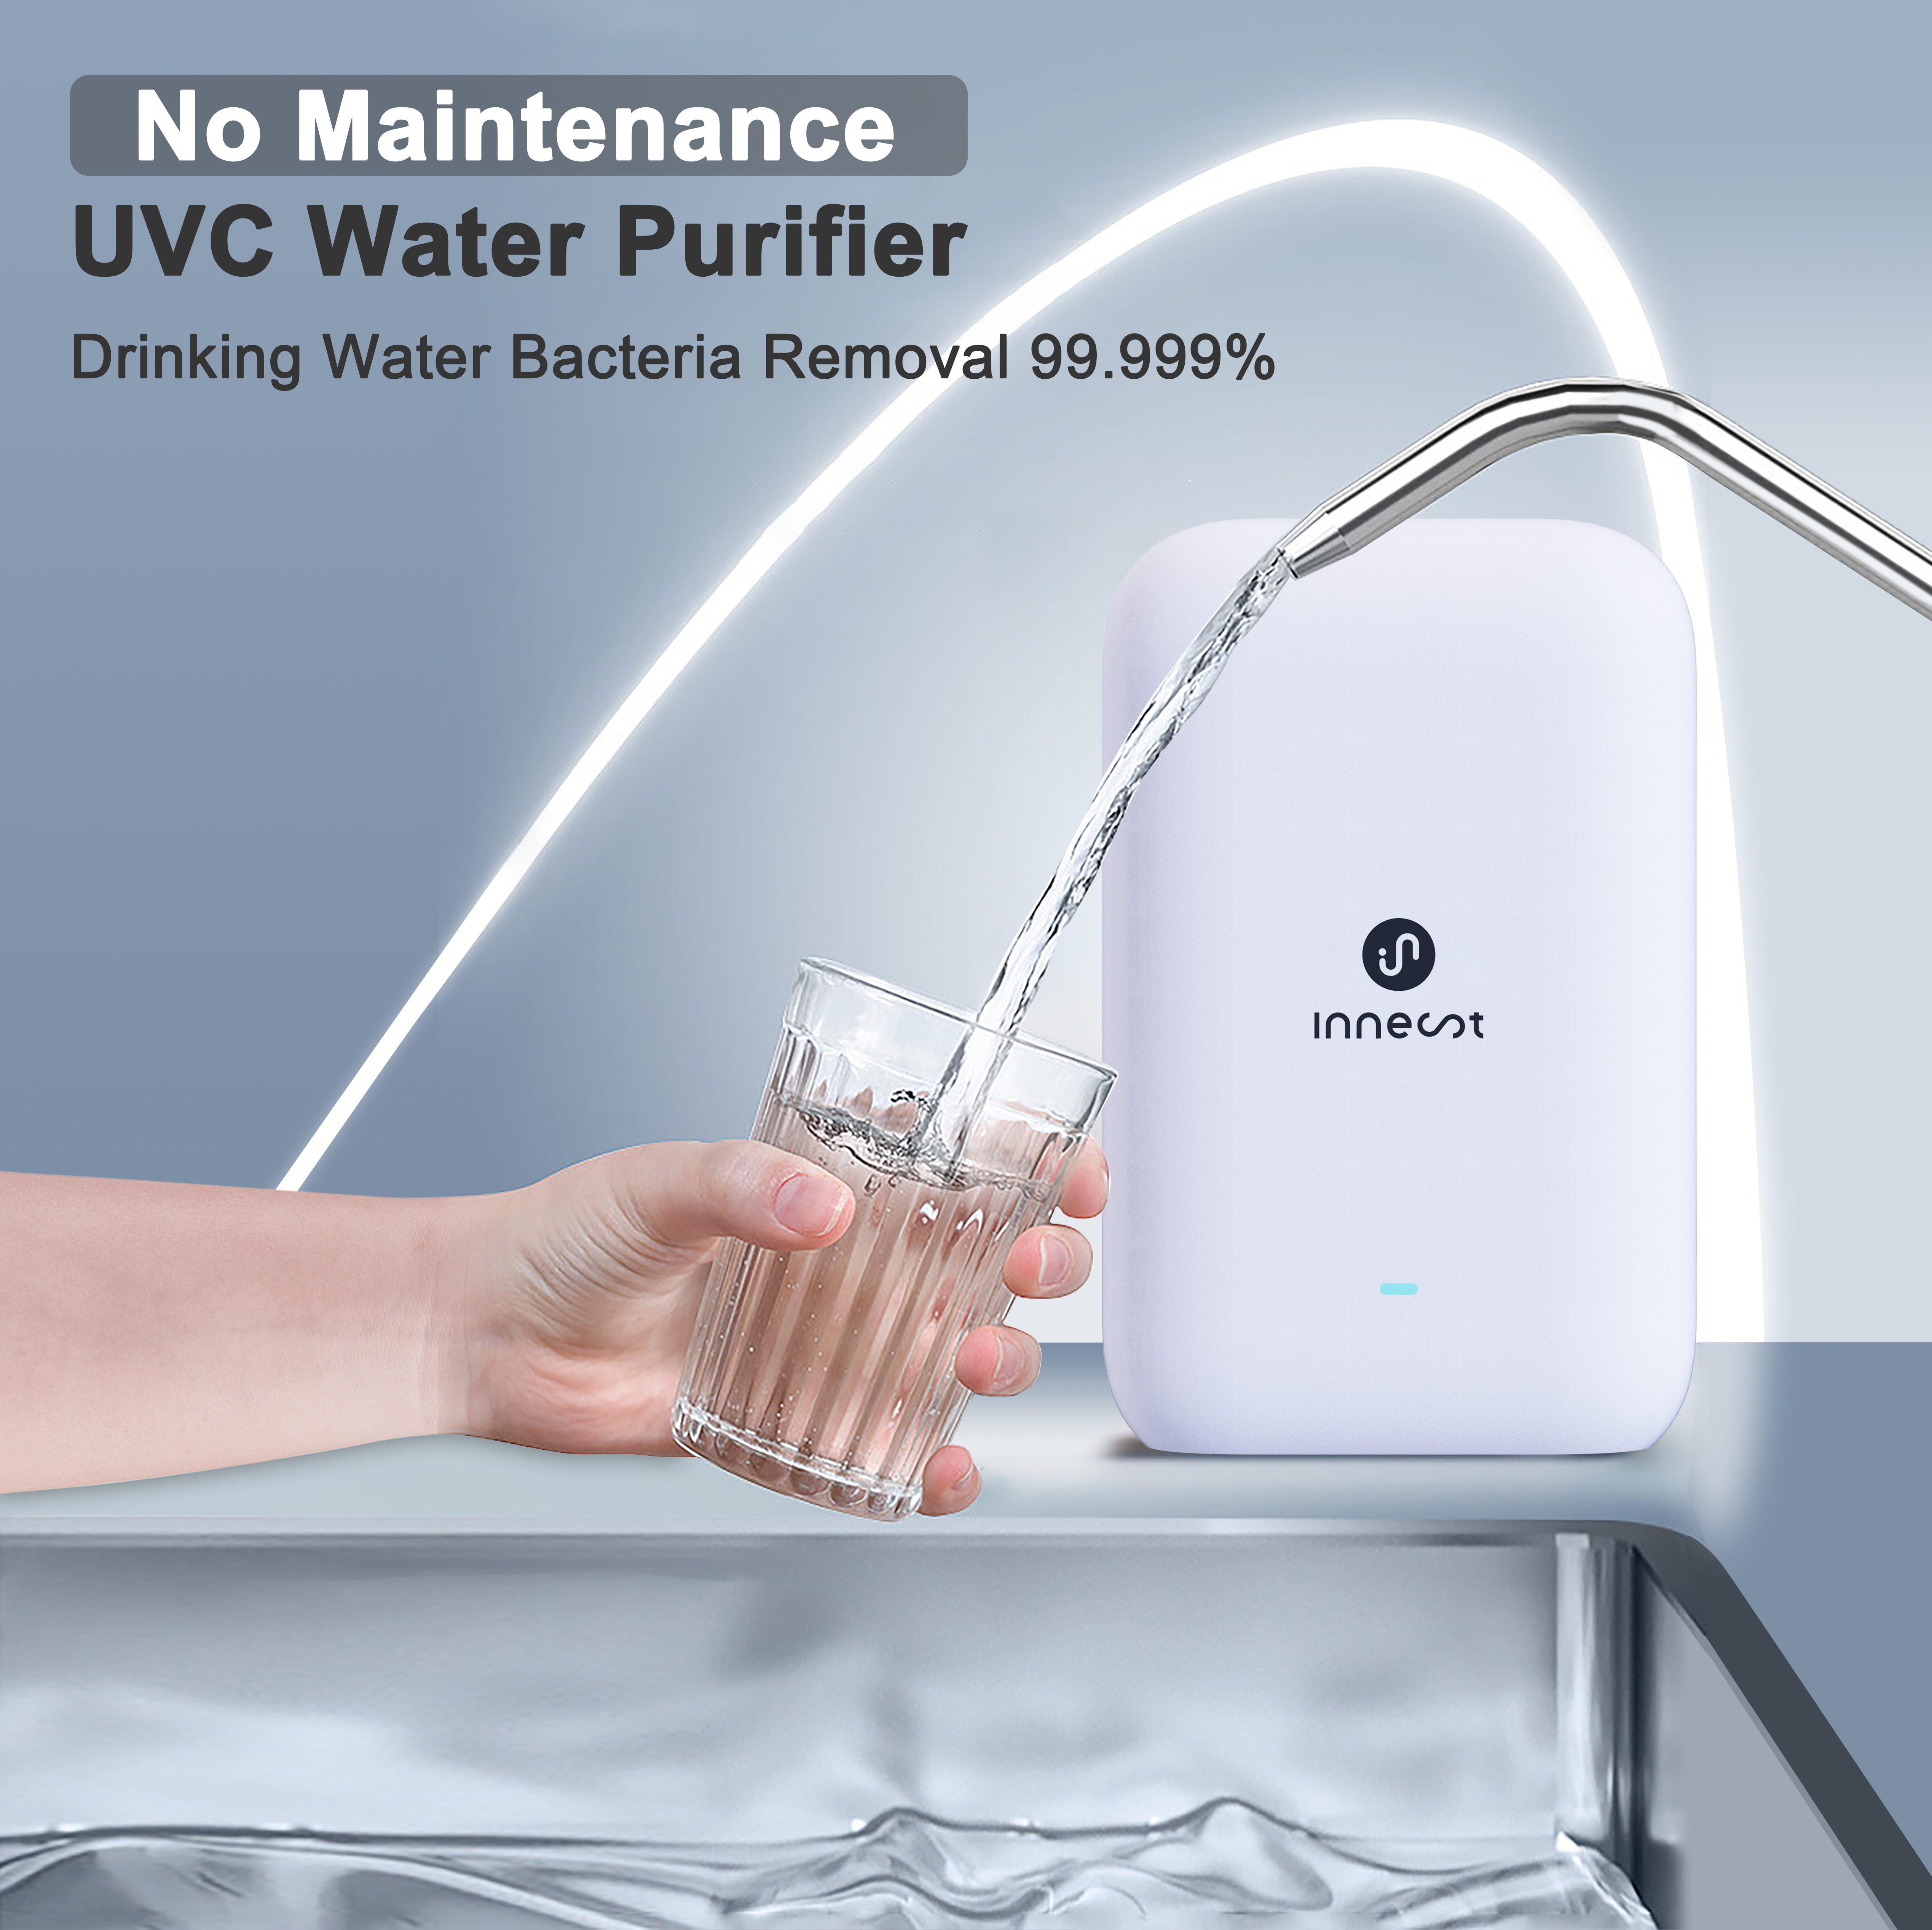 Mainternance-free UVC Water Purifier: 99.999% Disinfection Rate | EPA Certified. See how it works: https://www.youtube.com/watch?v=Kg8tEMRJr9M&t...